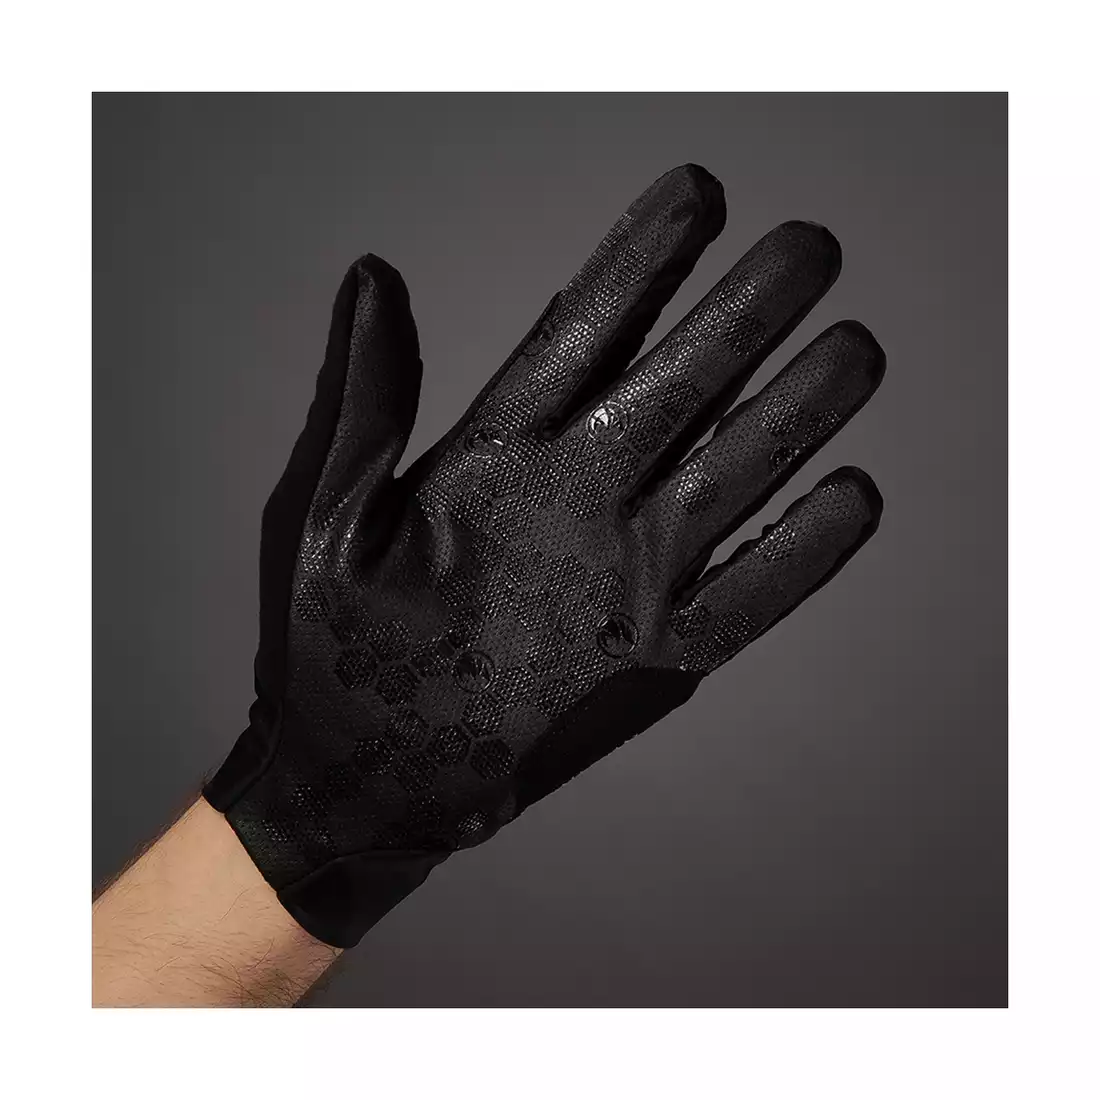 CHIBA SUPERLIGHT cycling gloves black